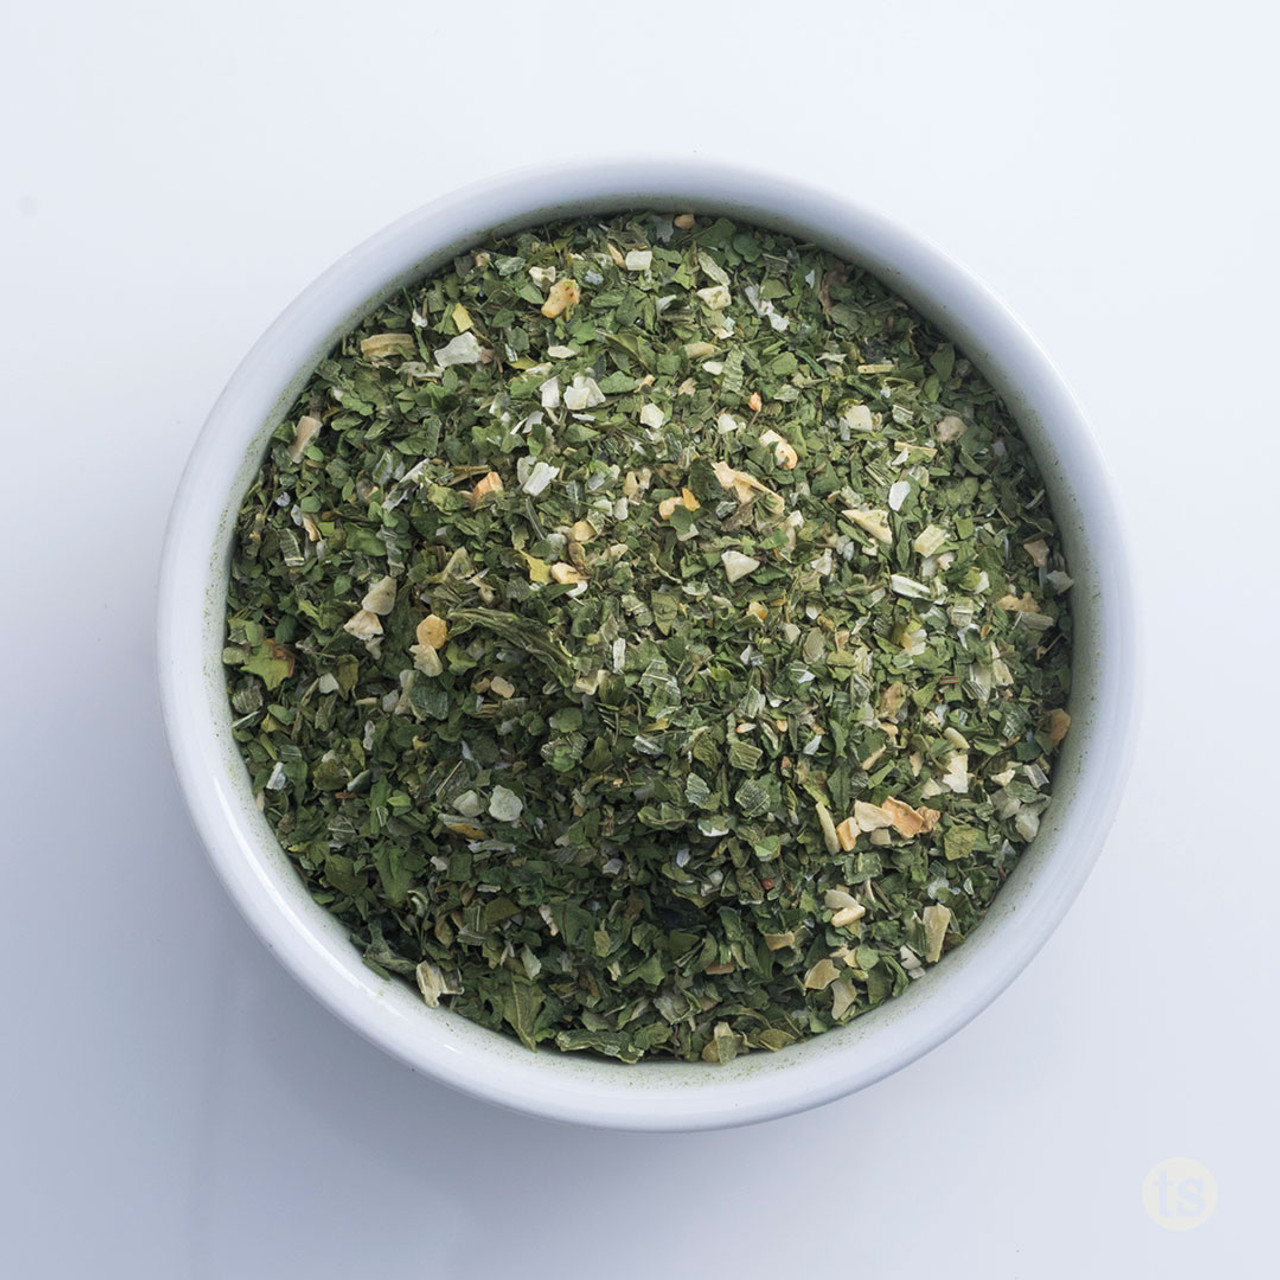 Spinach & Herb Seasoning Value Pack